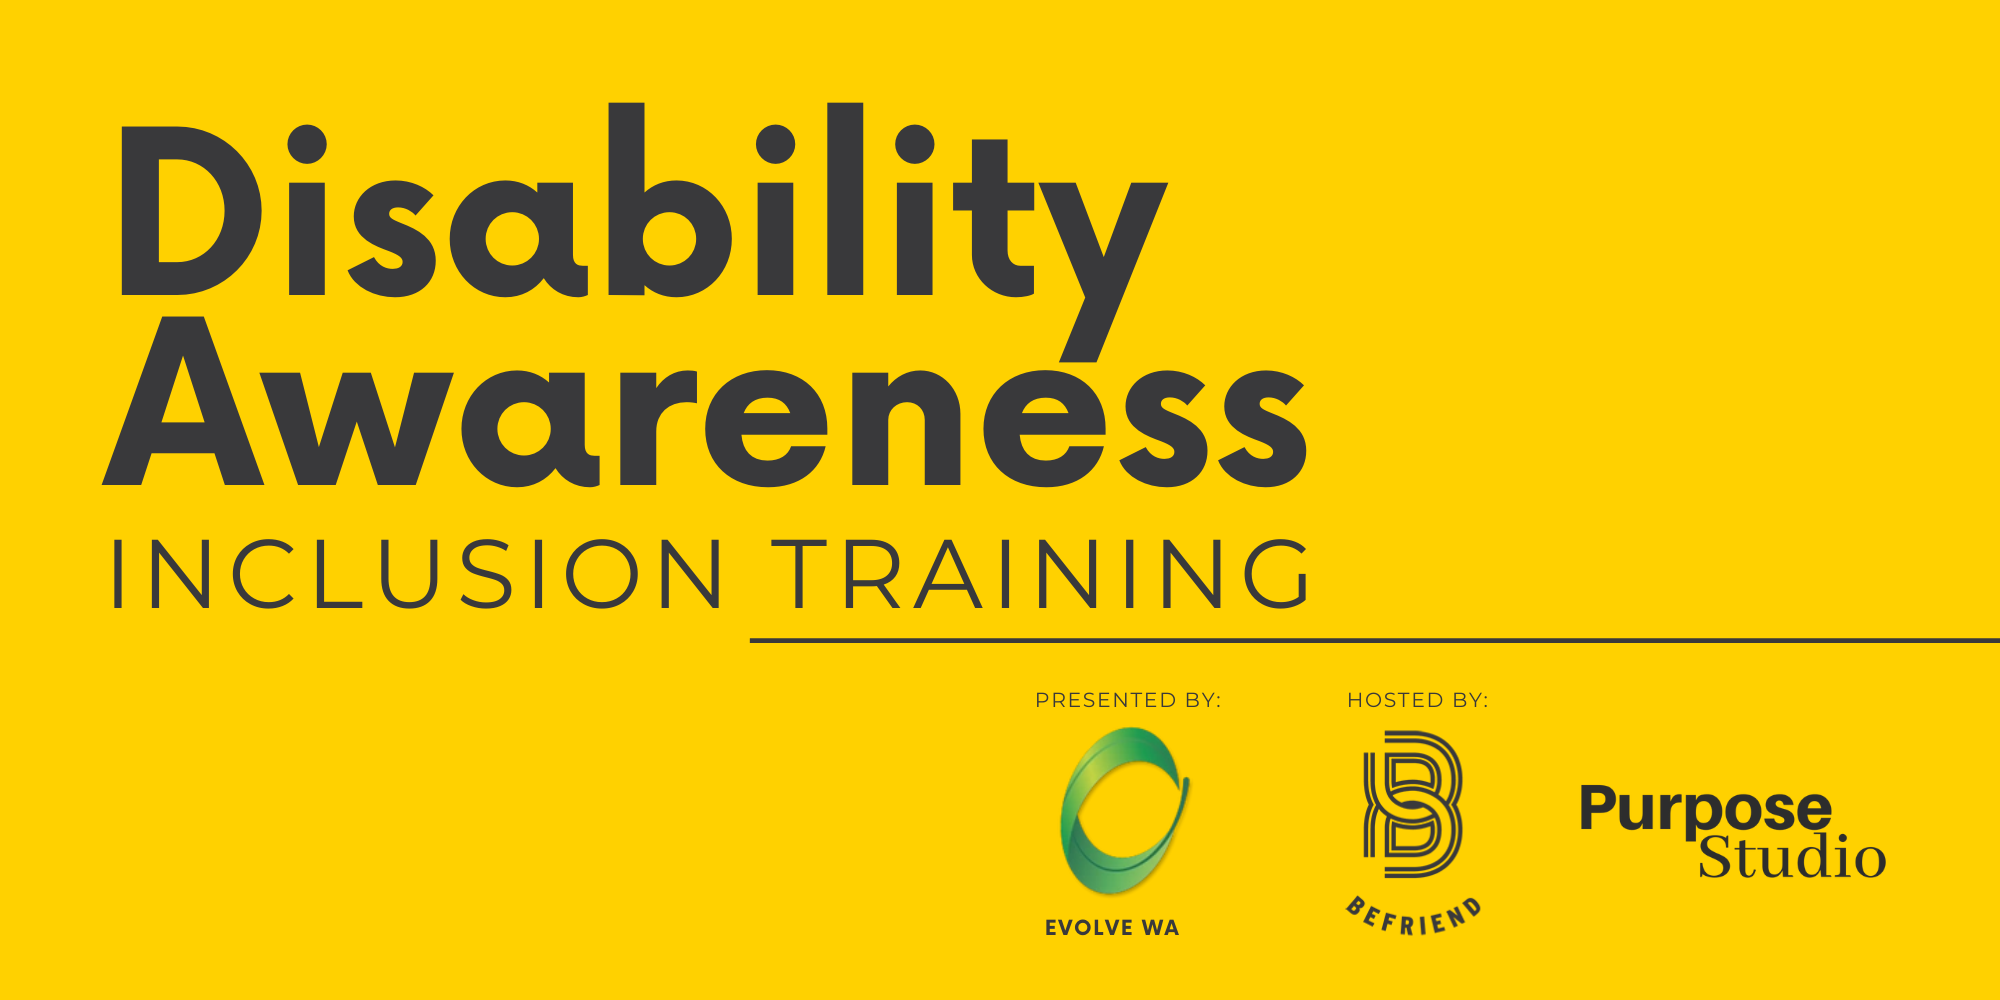 Disability Awareness Inclusion Training